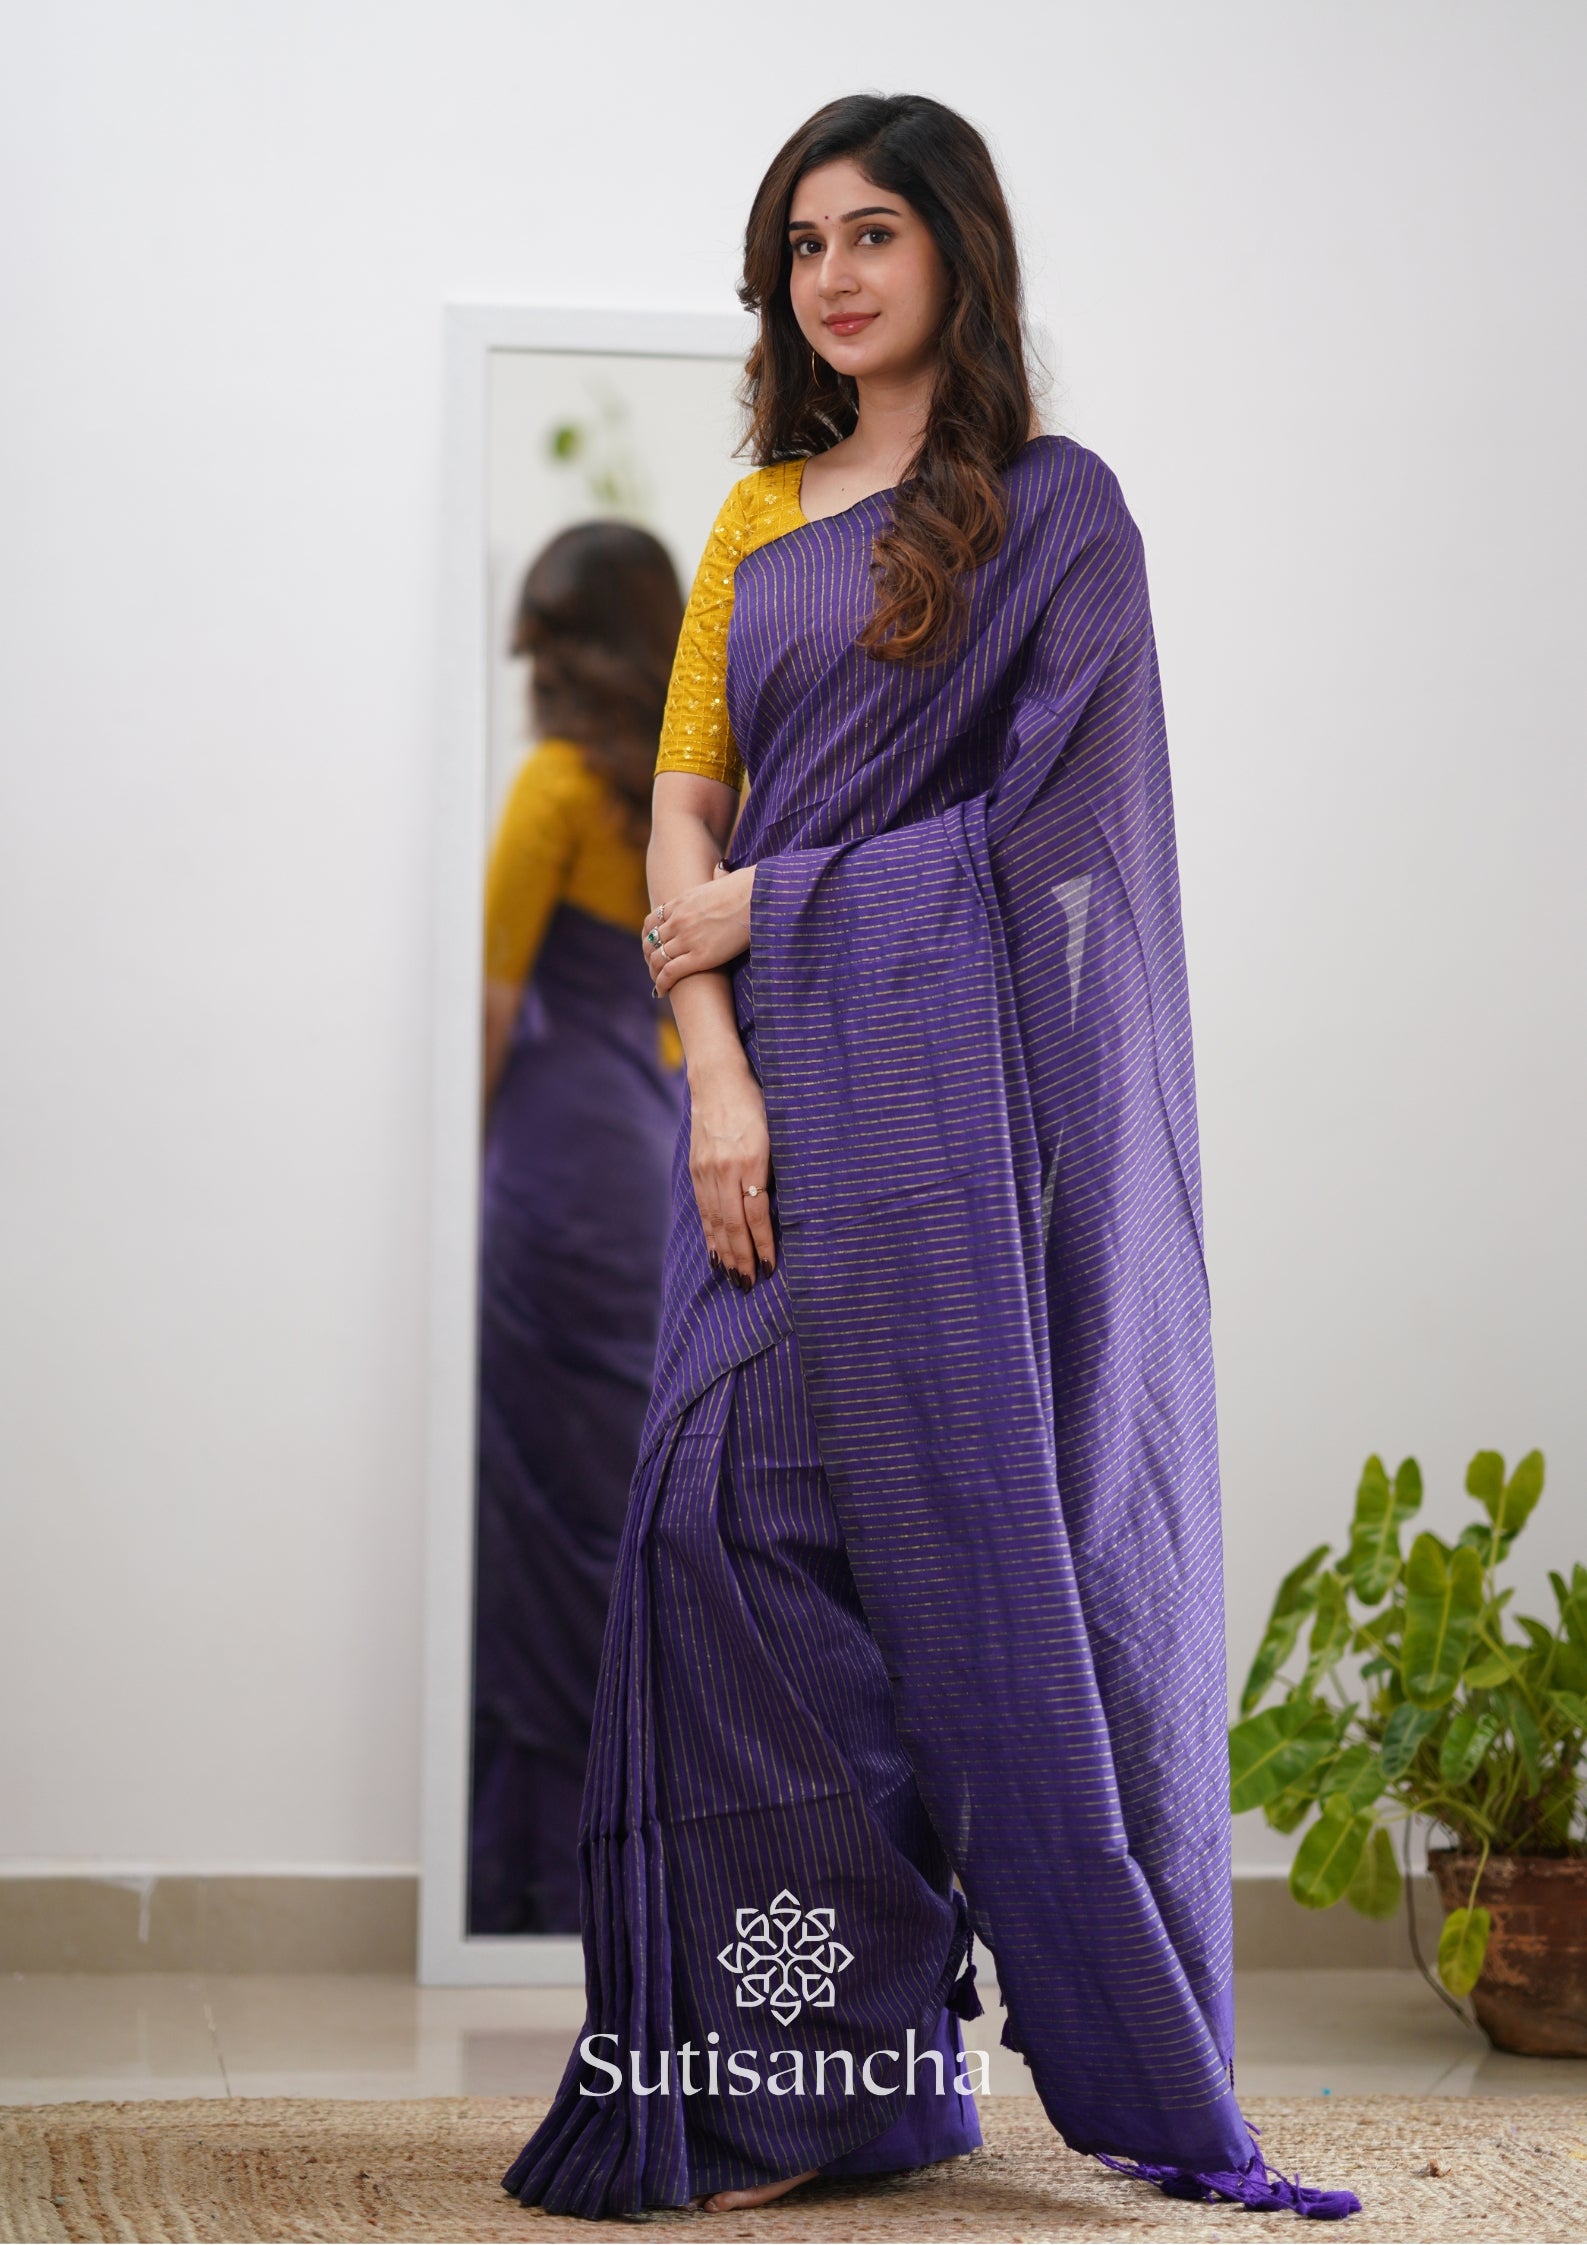 Sutisancha purple Stripe cotton Saree designer work Blouse